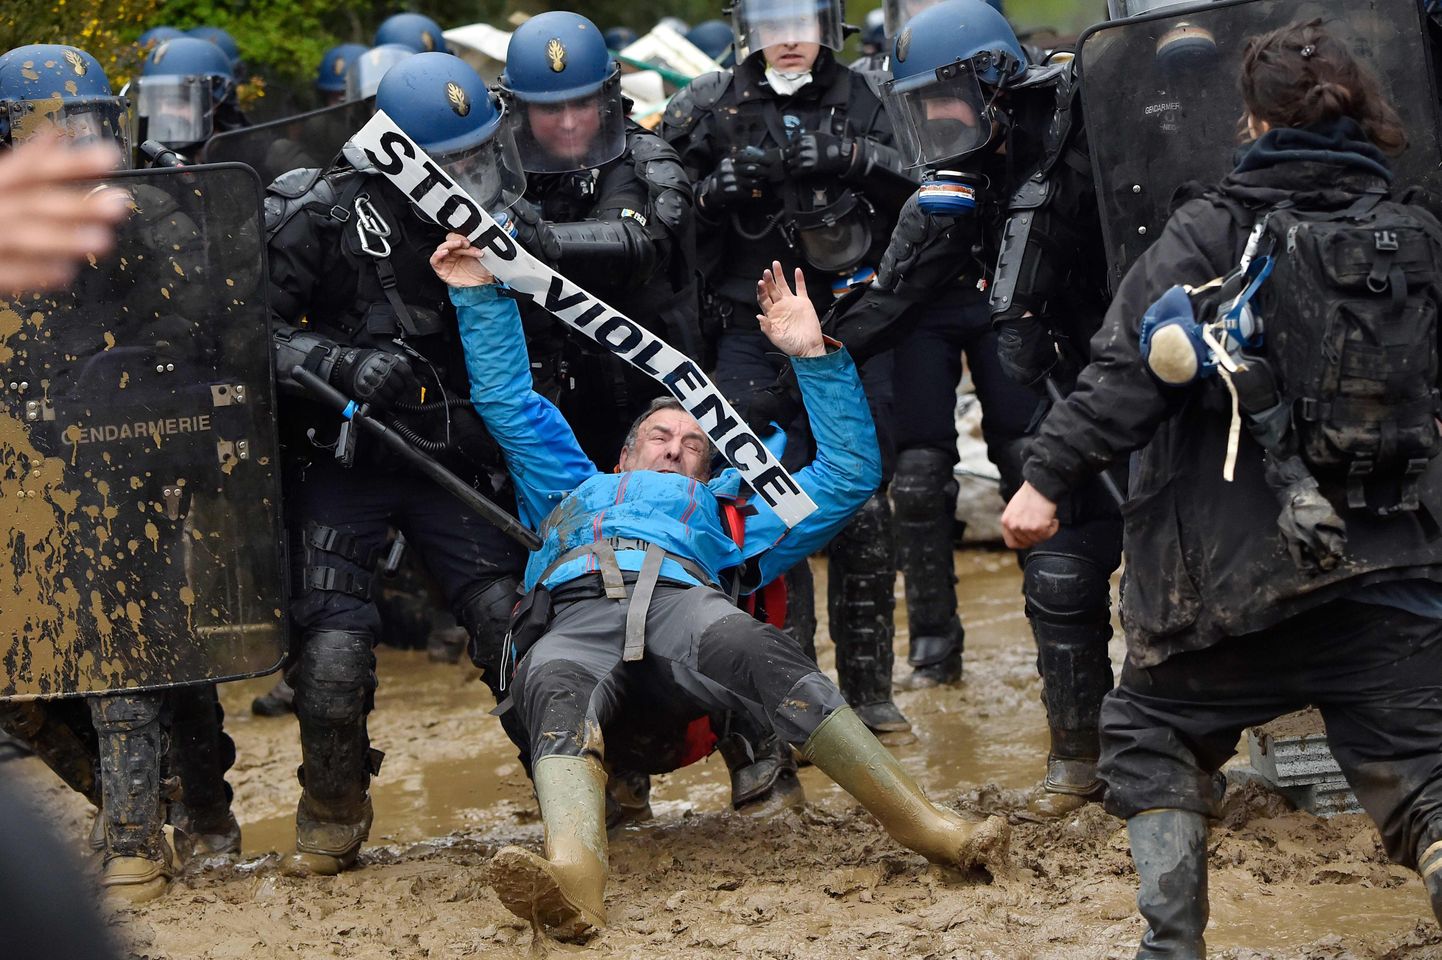 Prantsuse sandarmid aktivisti kallal.